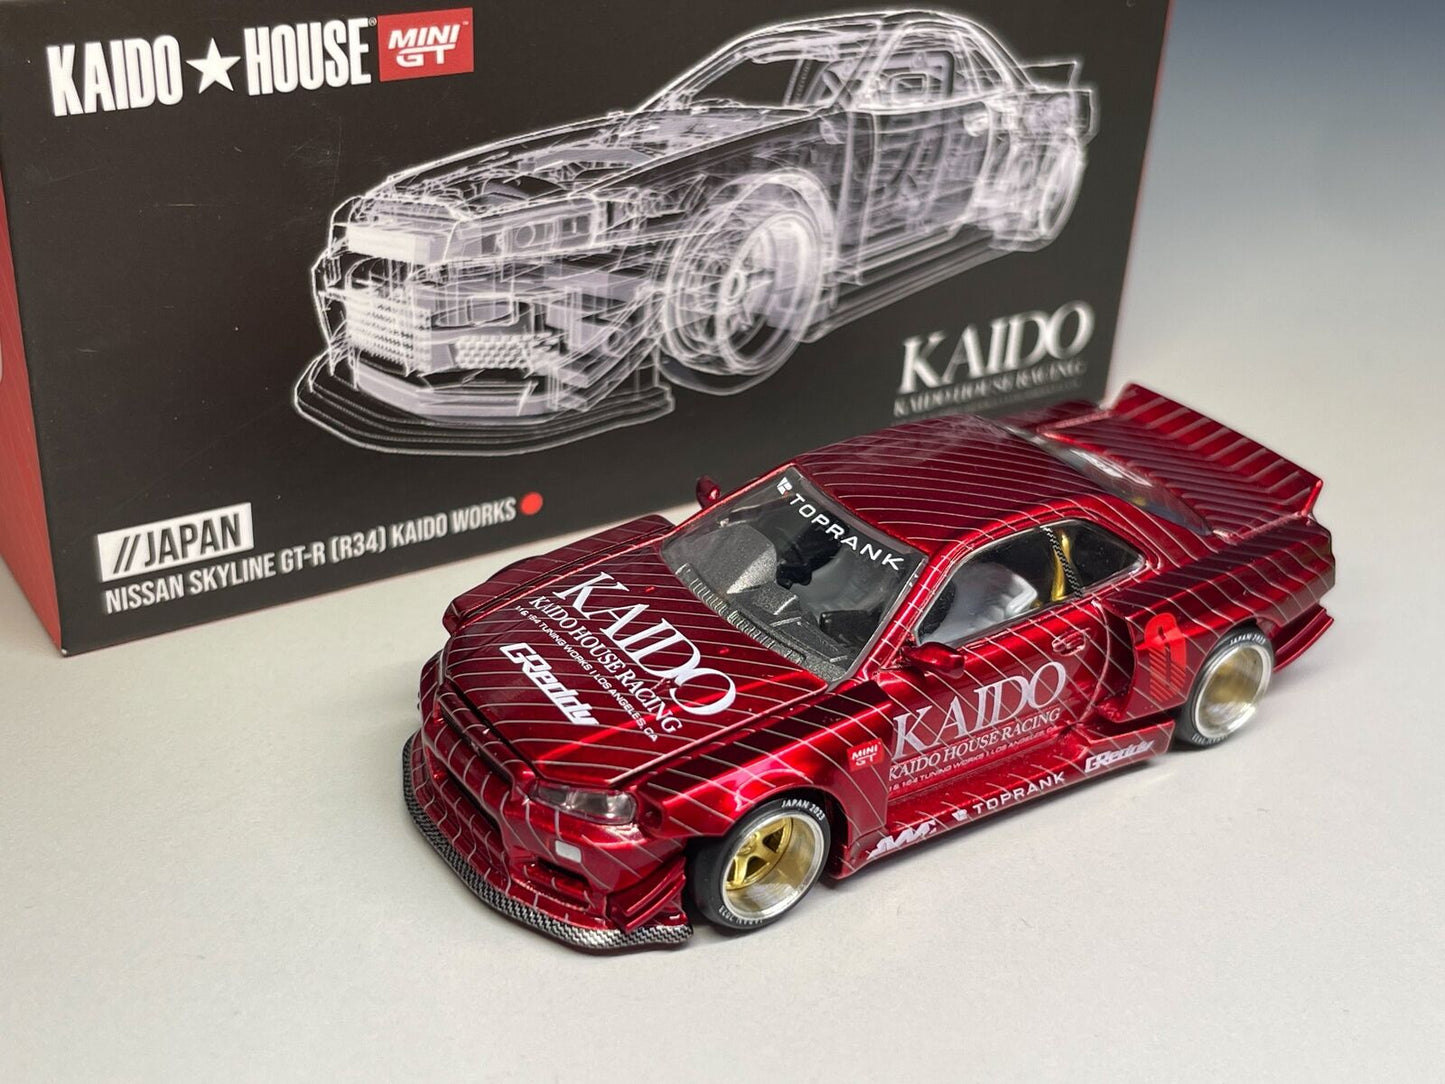 MiniGT X Kaido House Nissan Skyline GT-R R34 Red - 2023 Shizuoka Hobby Show Japan Exclusive